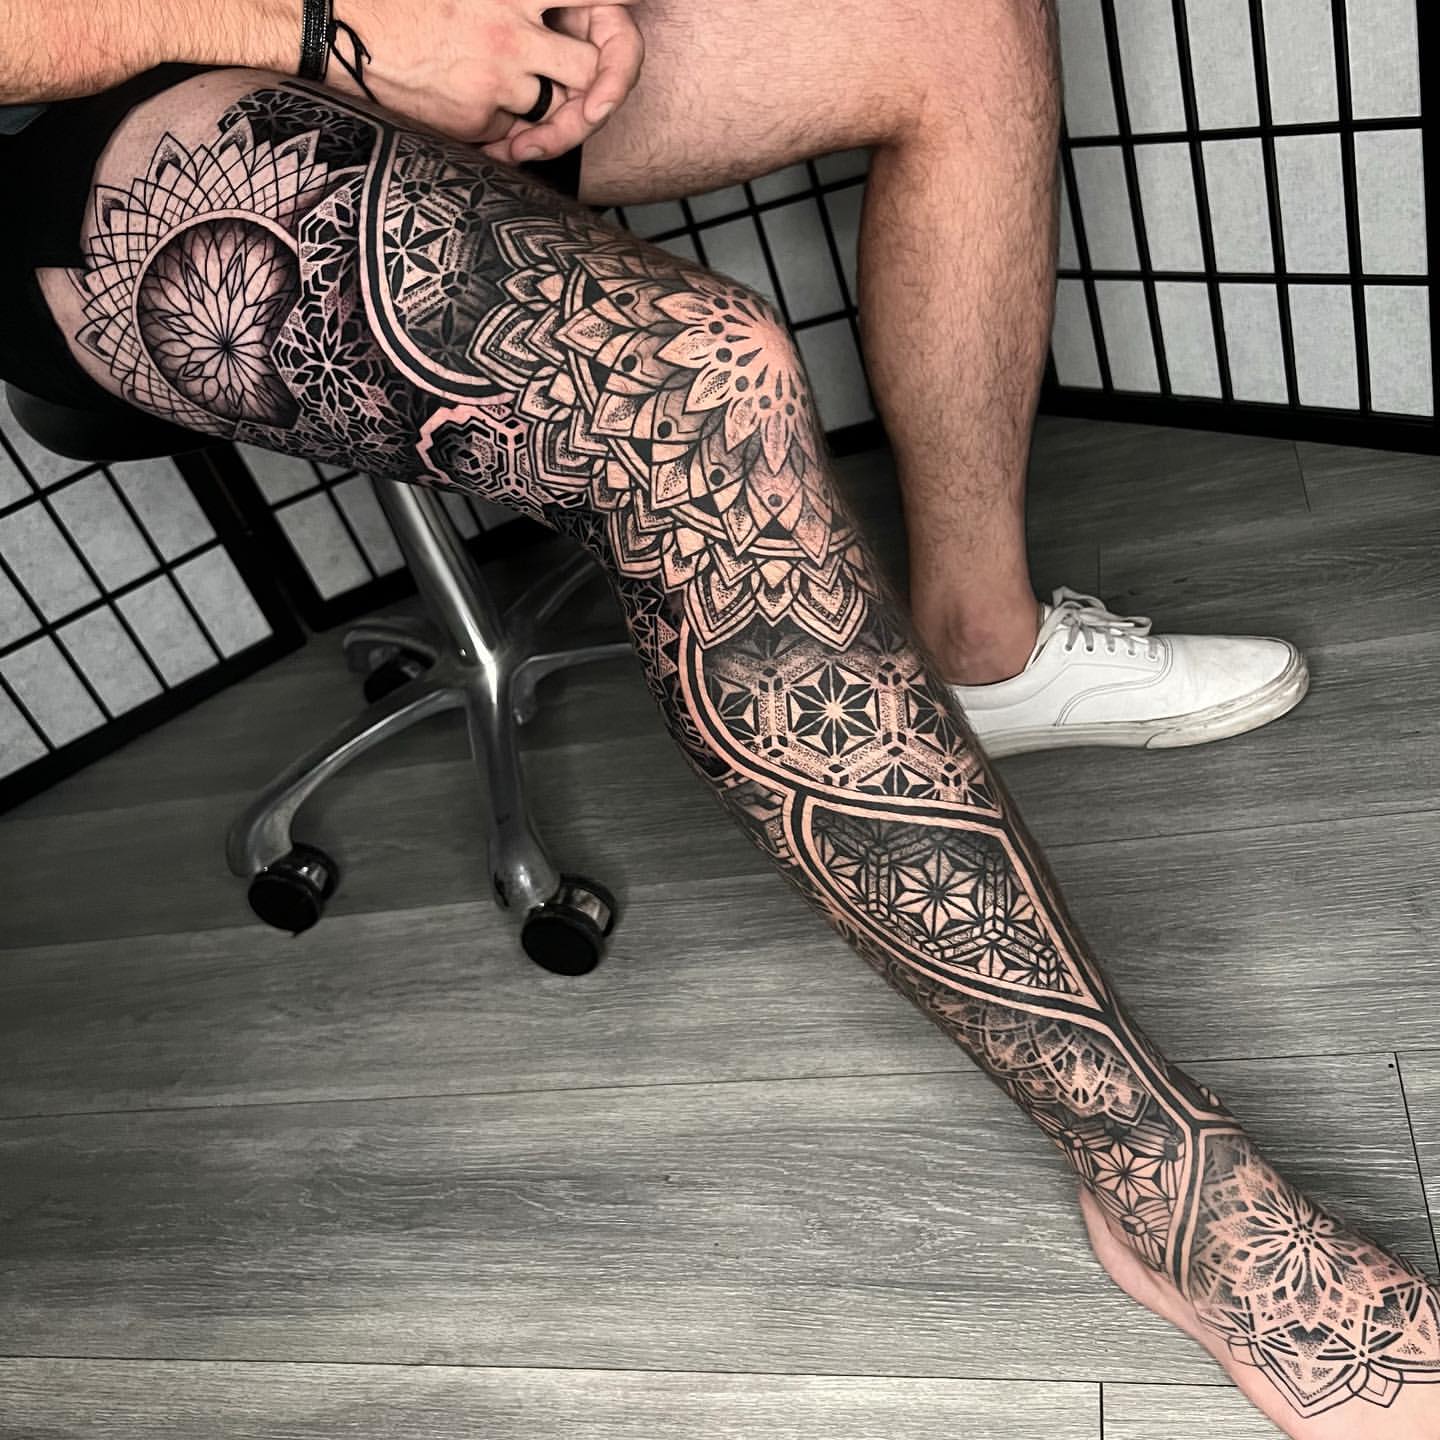 33 Coolest Leg Tattoos for Men | Vivid Ink Tattoos